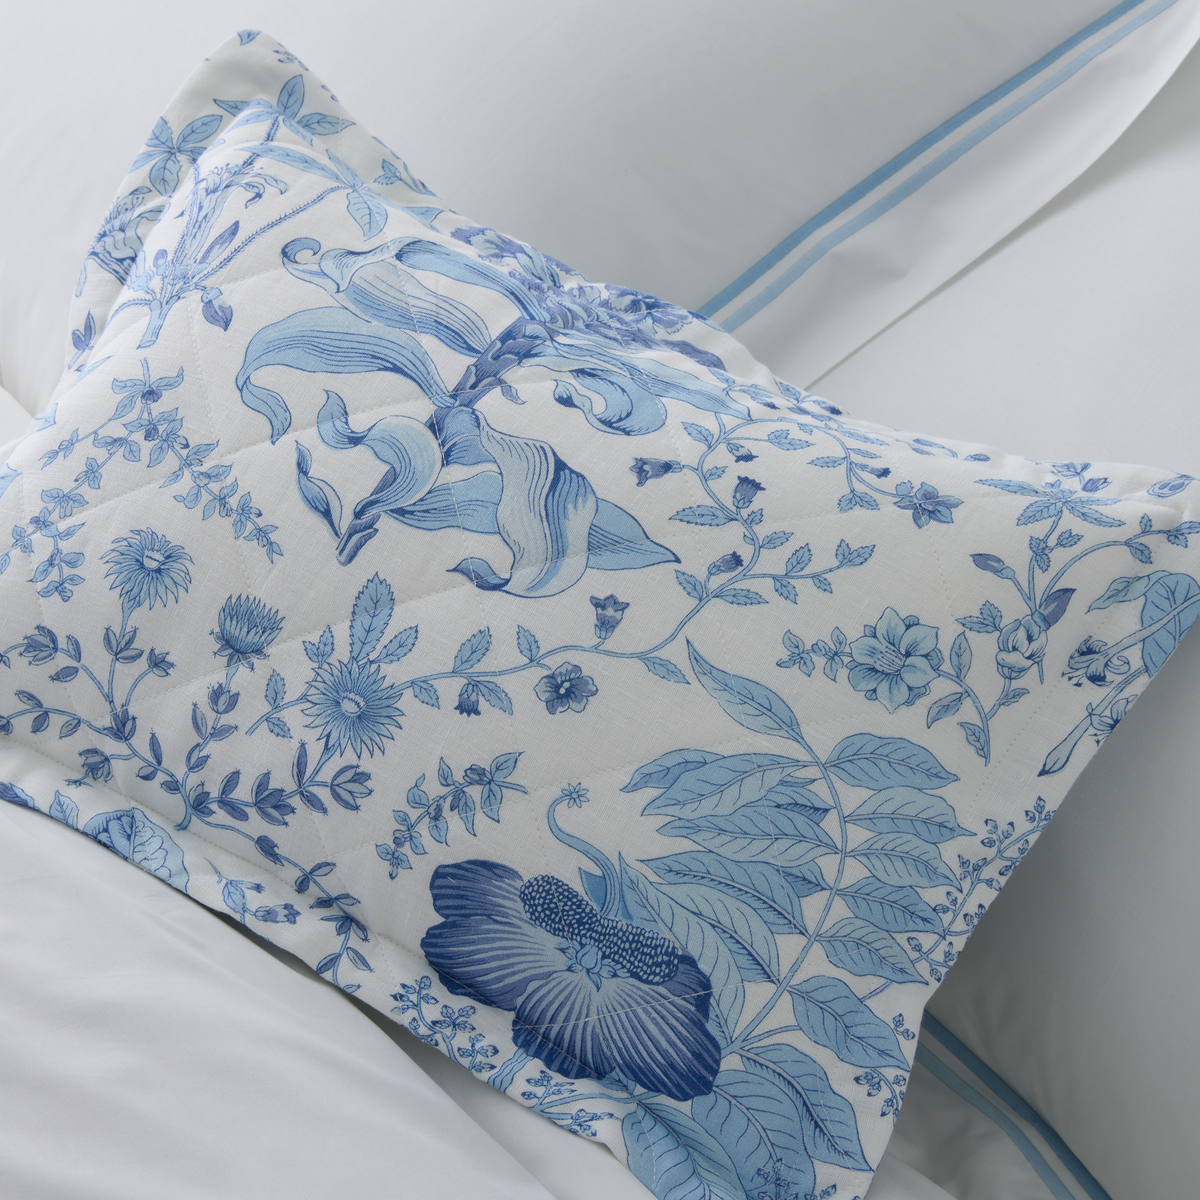 Detailed Top View of Matouk Schumacher Pomegranate Linen Bedding Sham in Porcelain Blue Color